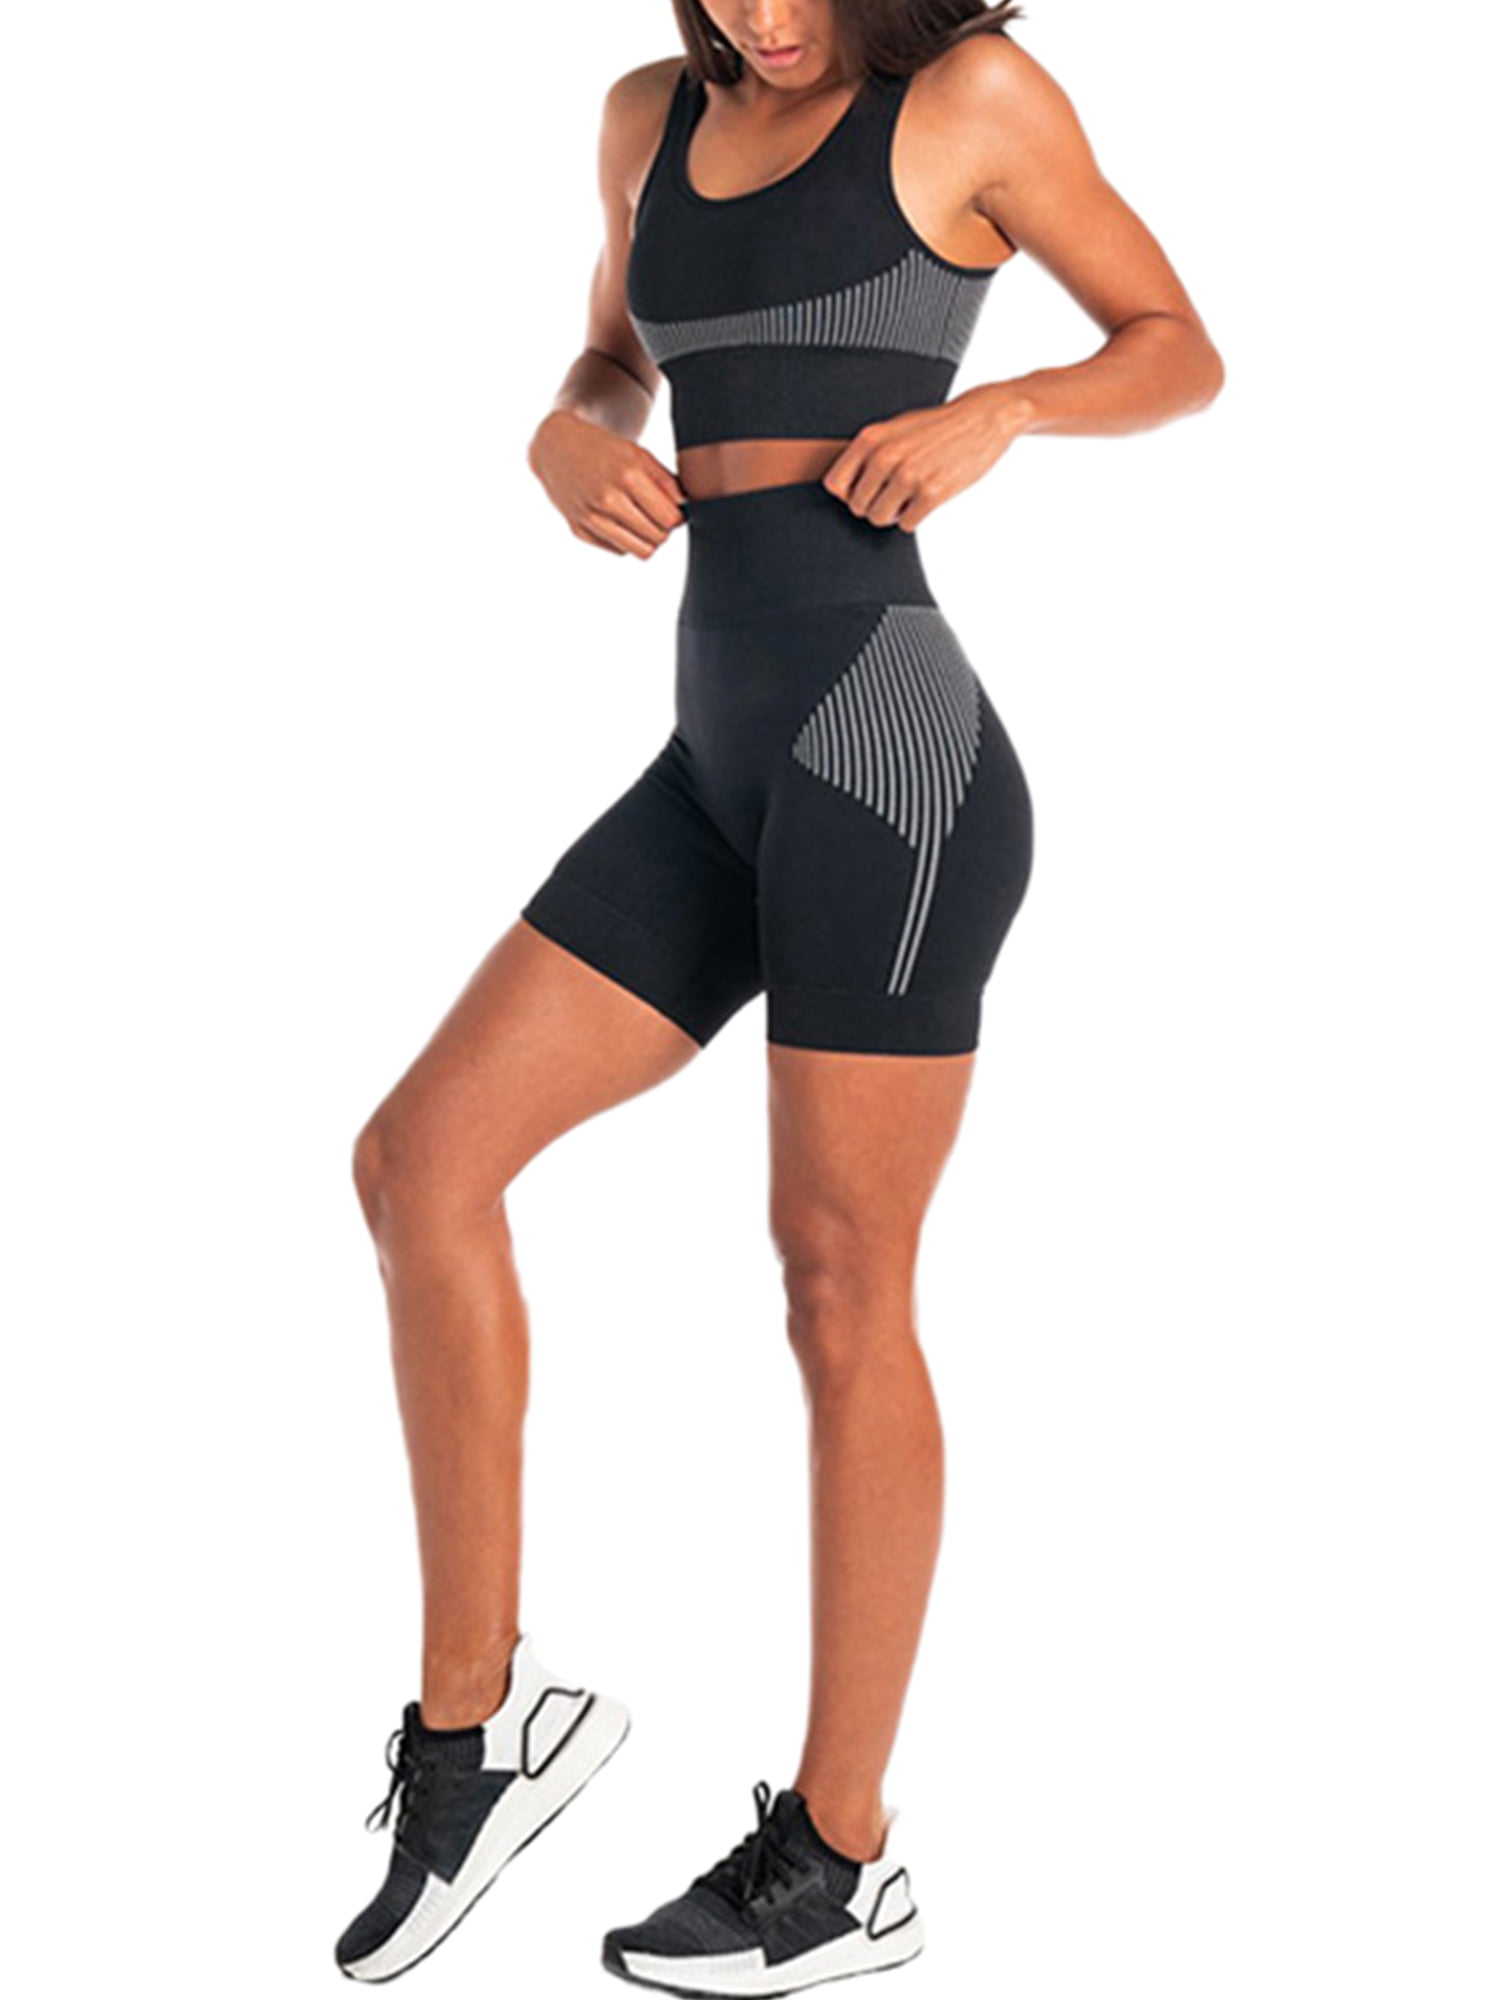 Grey in Black Racerback Blue Yoga Fitness Activewear for Workout Running Sleeveless Shirt Gym DANISH ENDURANCE Women’s Fitness Tank Top 